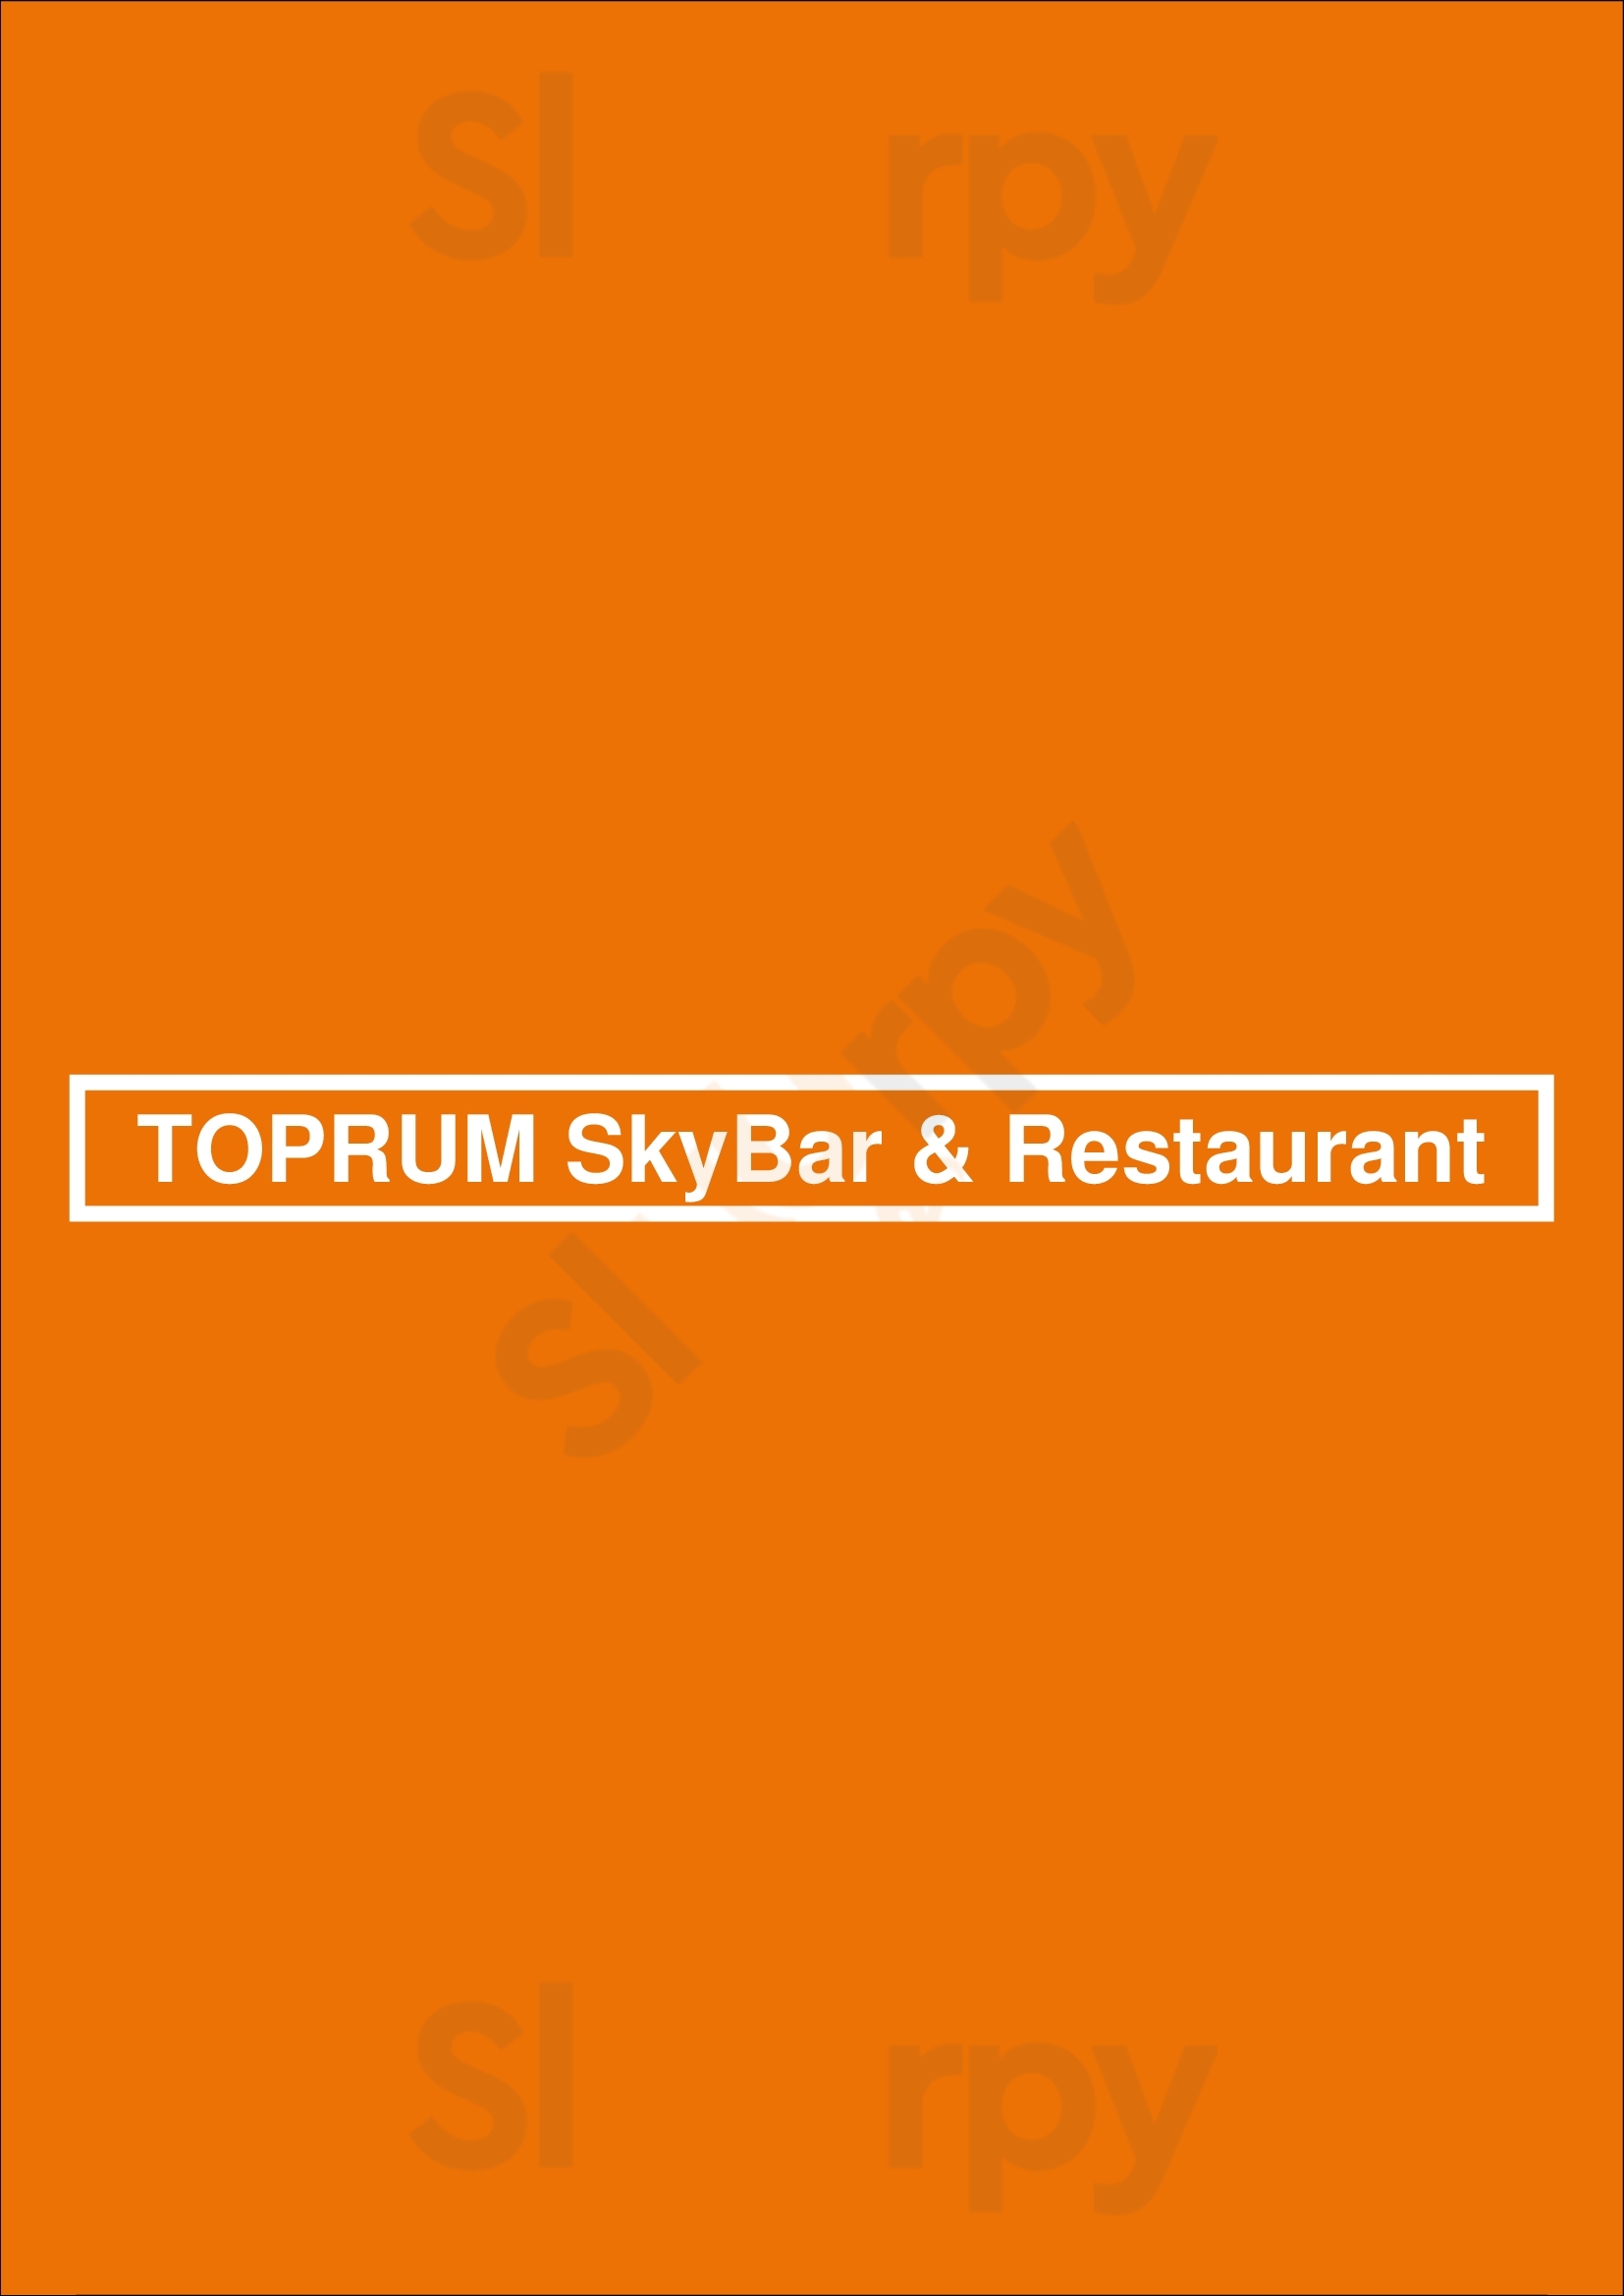 Toprum Skybar & Restaurant Budapest Menu - 1